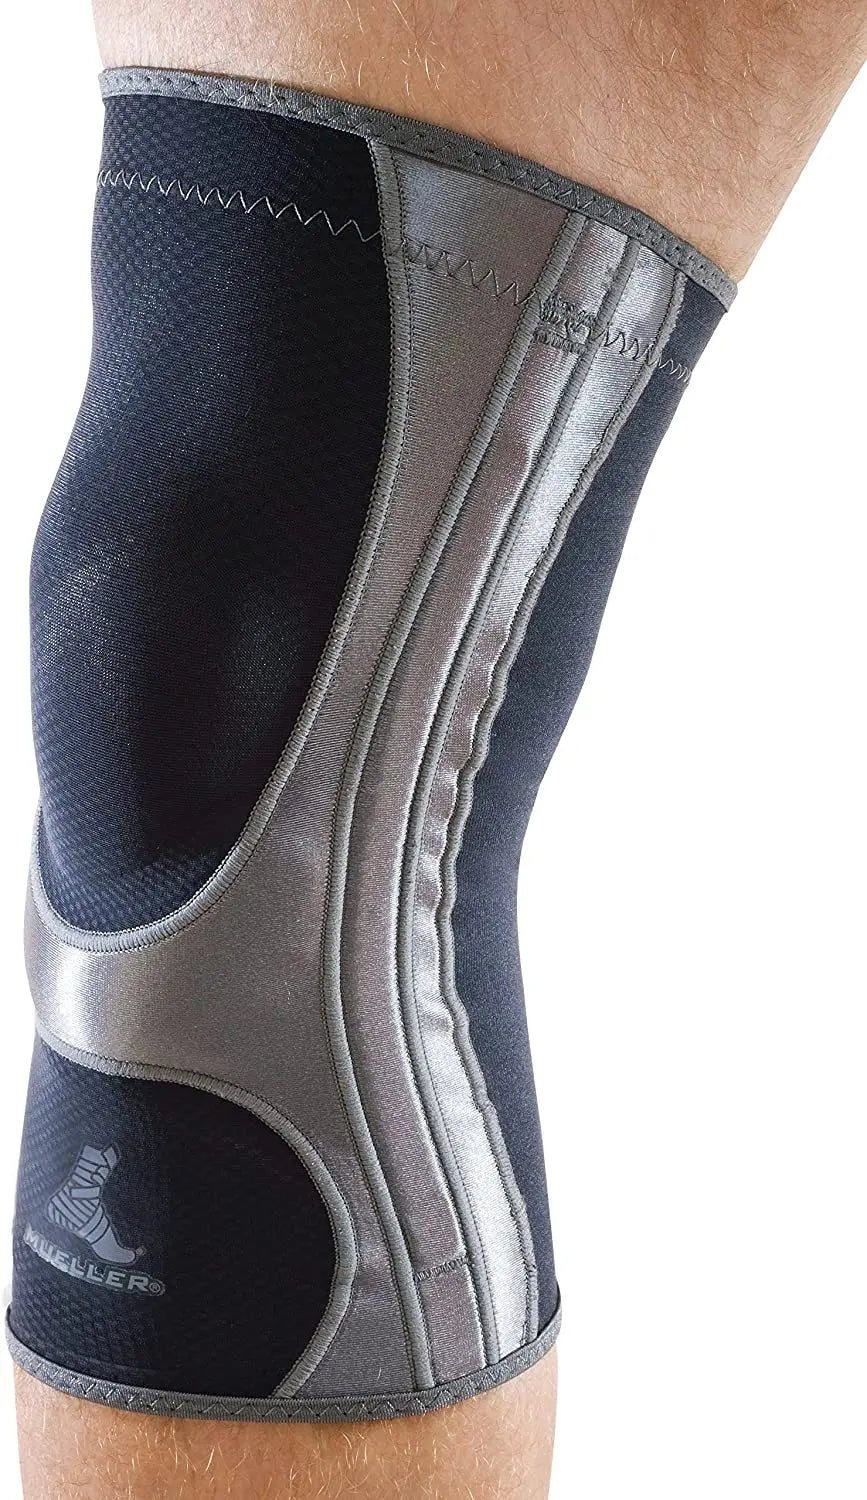 Mueller Hg80® Knee Brace, X Large